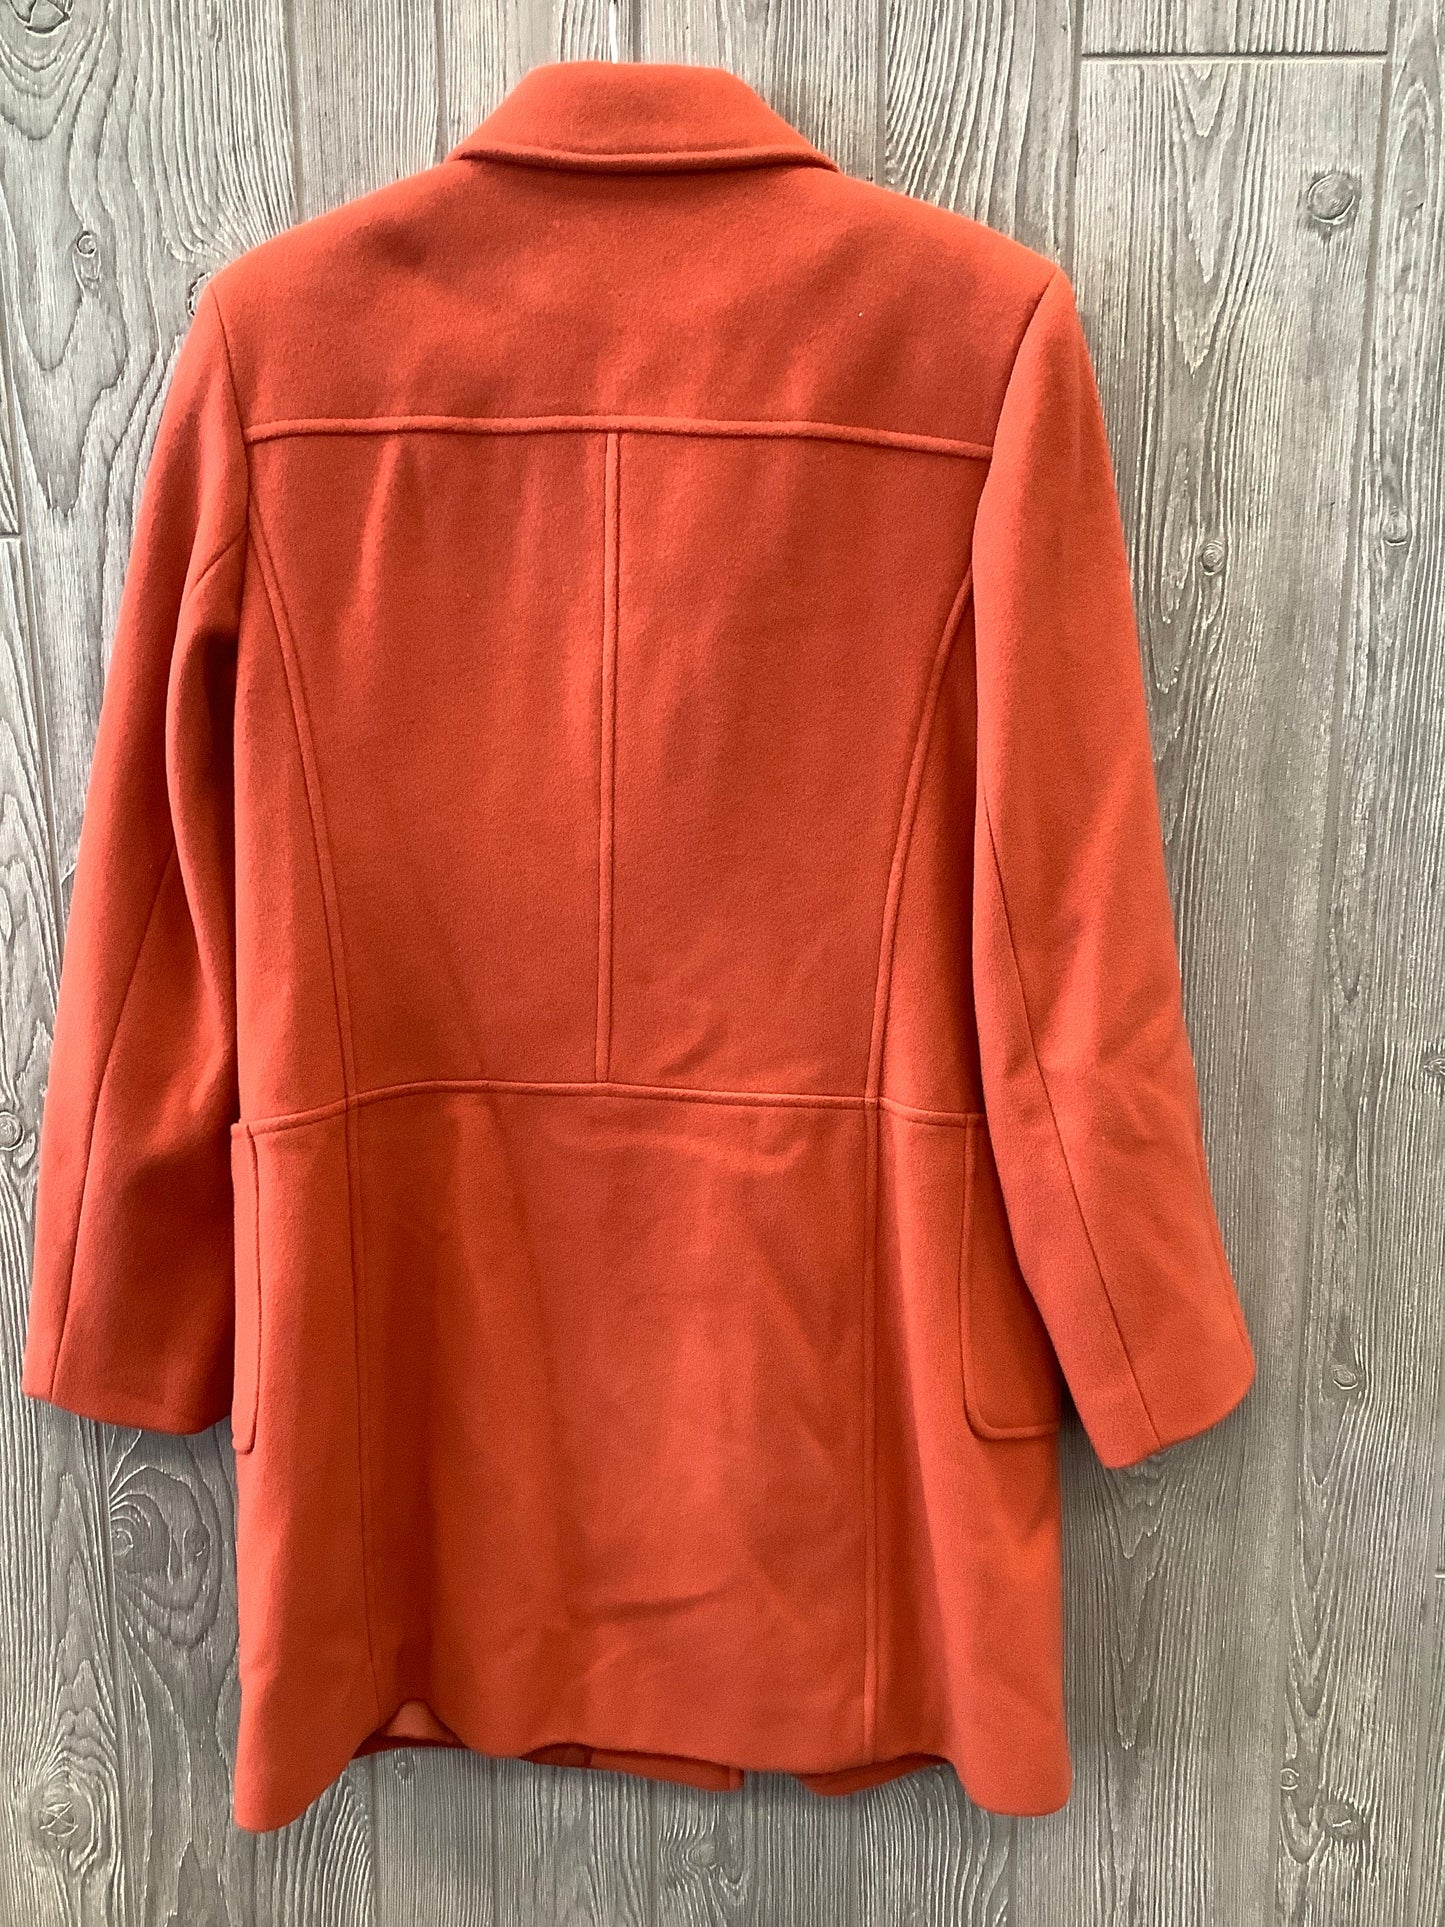 Orange Coat Peacoat Clothes Mentor, Size M